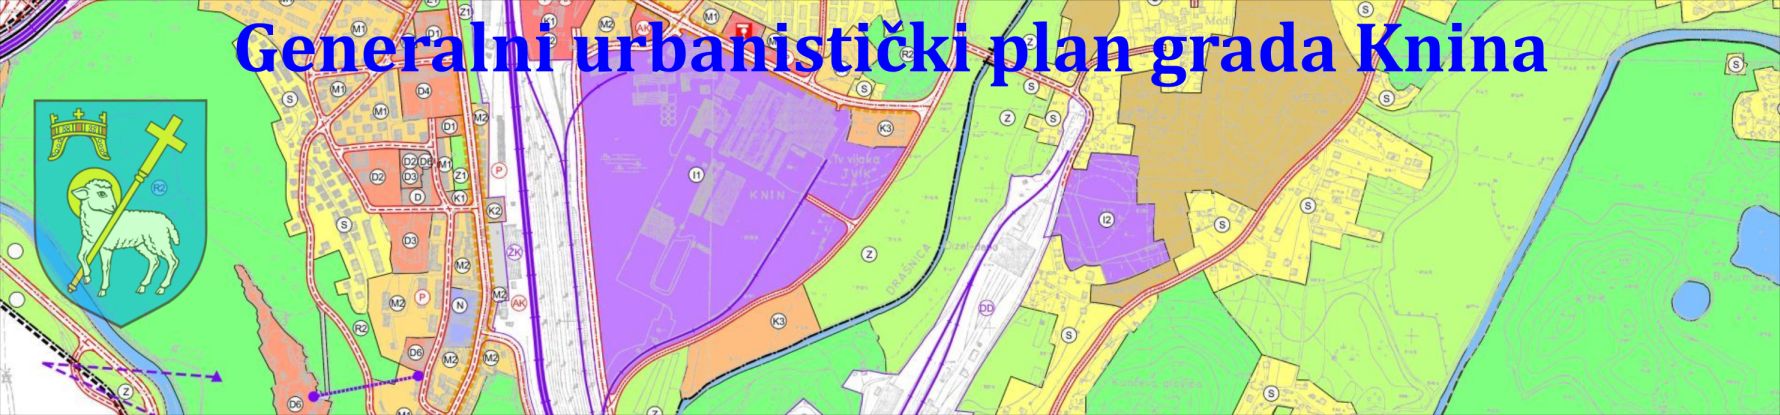 Generalni urbanistički plan grada Knina